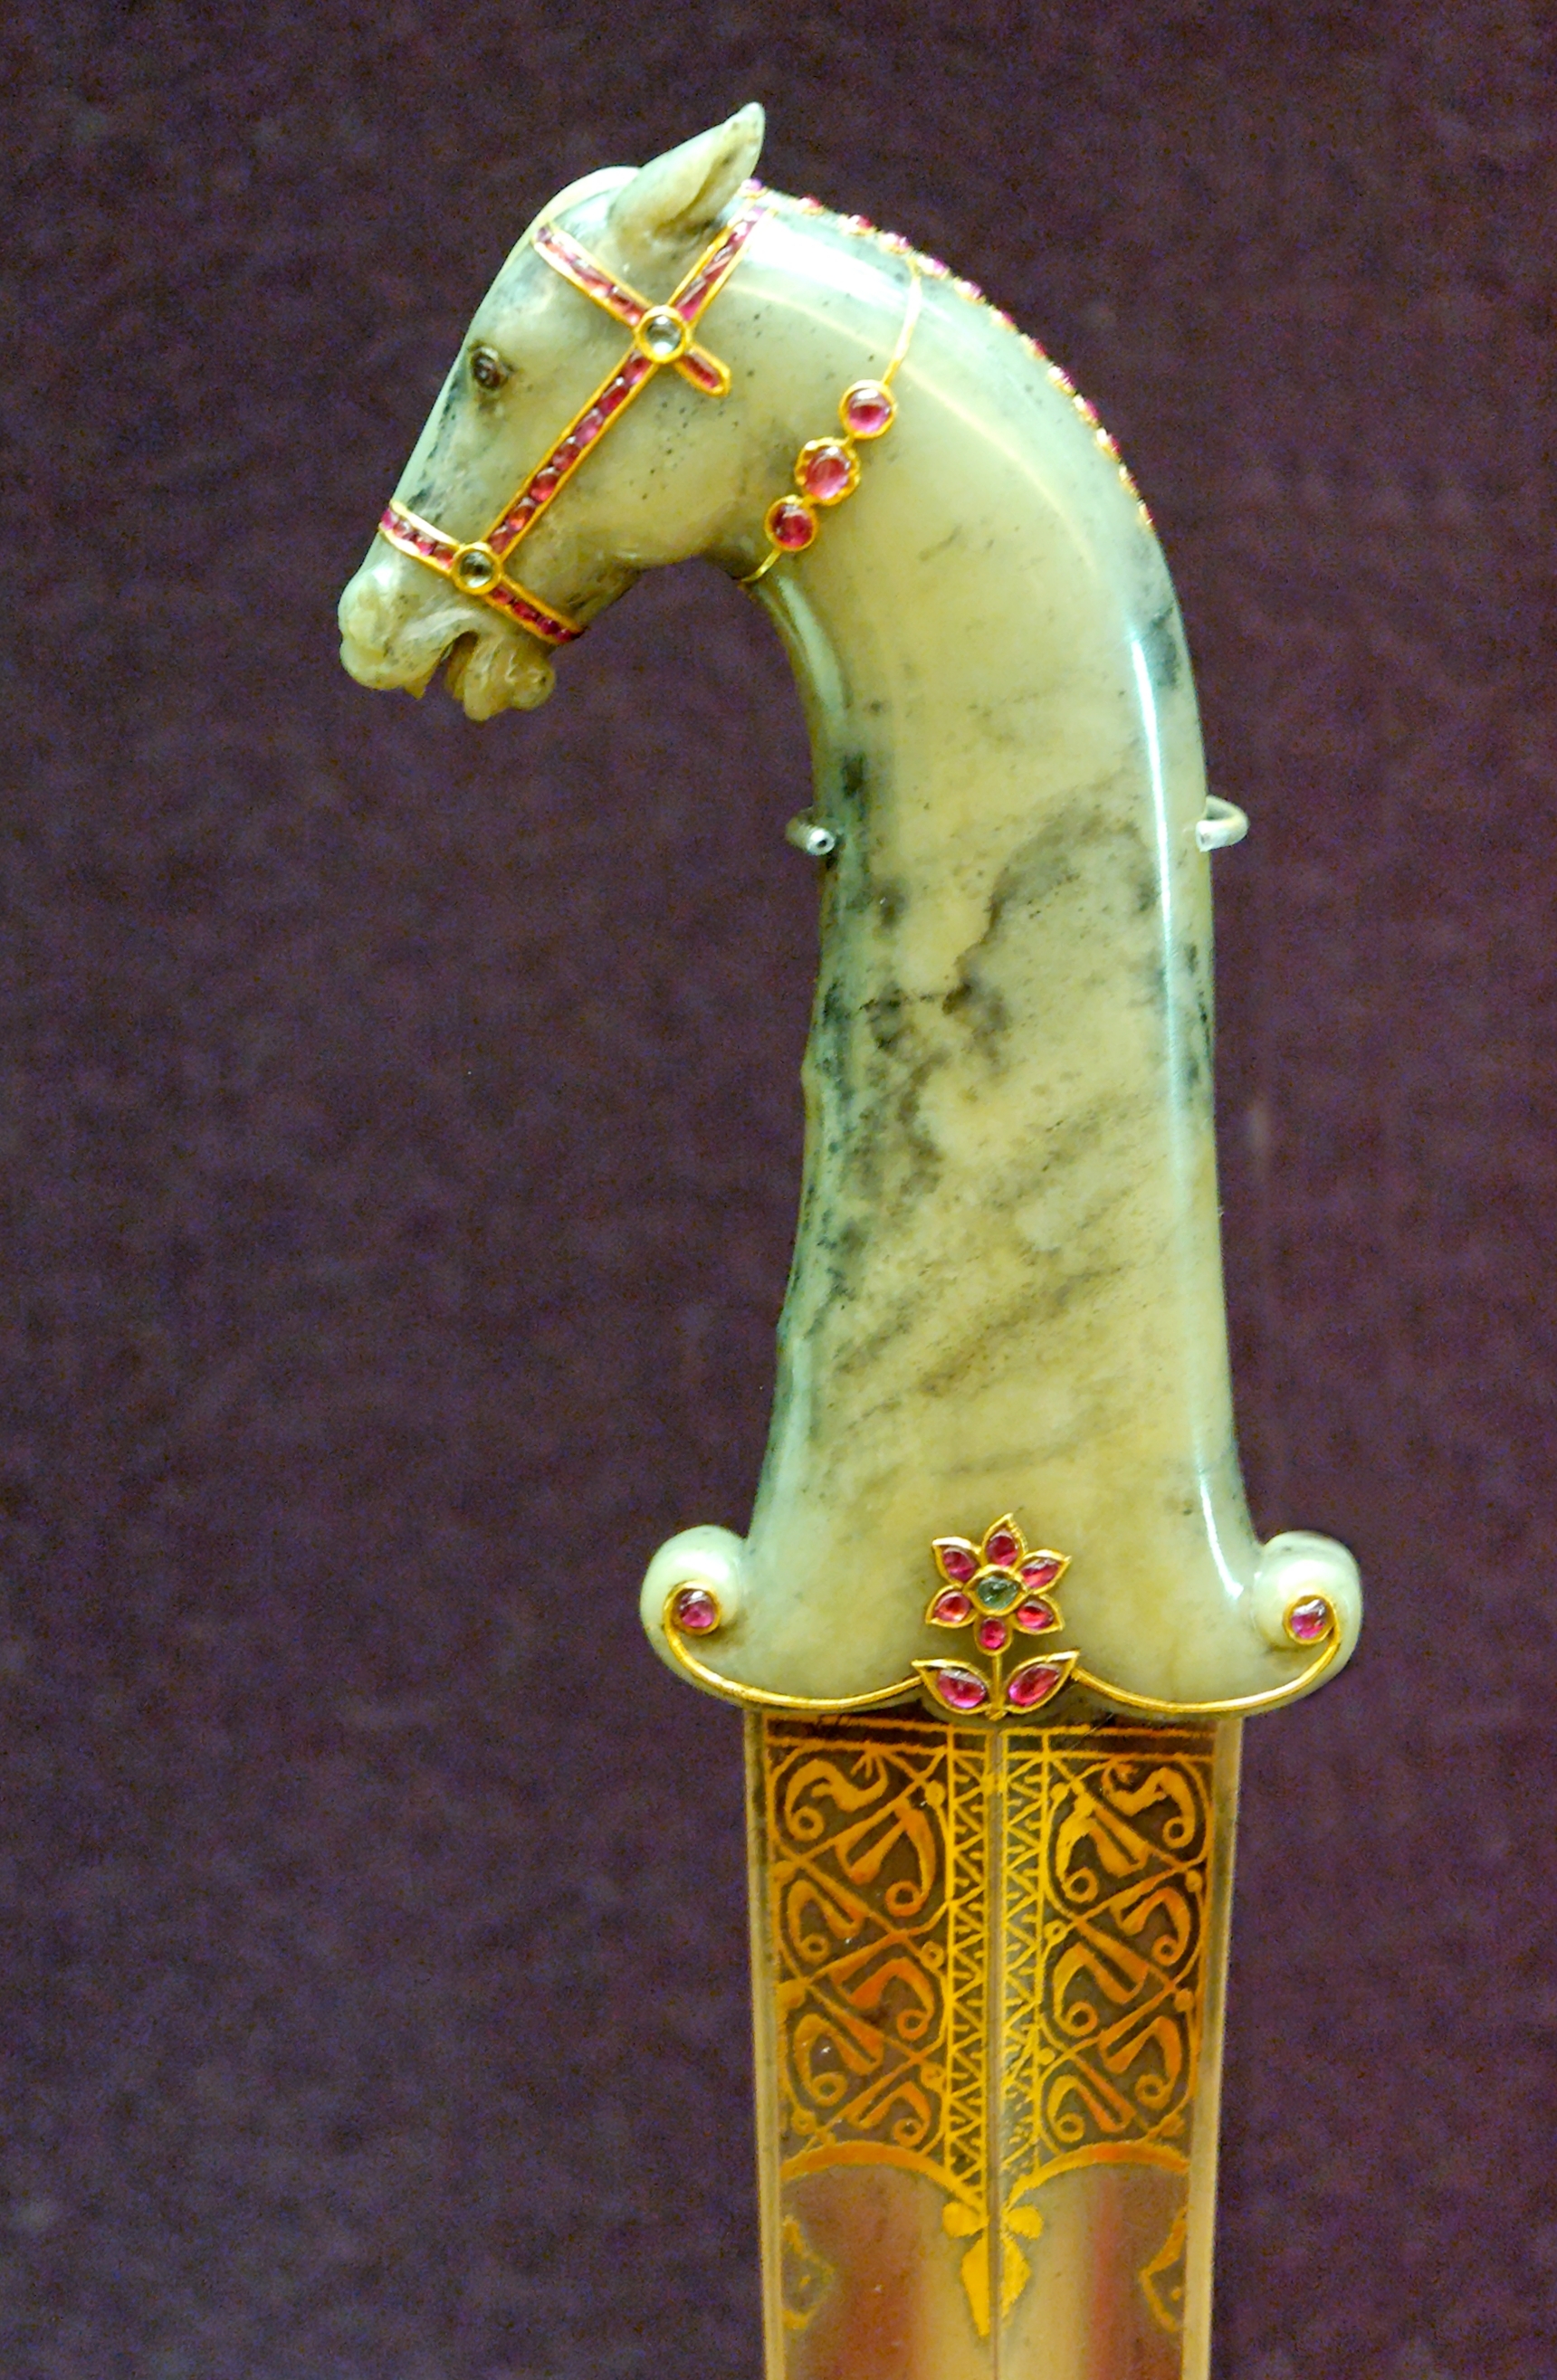 file-dagger-horse-head-louvre-oa7891-jpg-wikipedia-the-free-encyclopedia